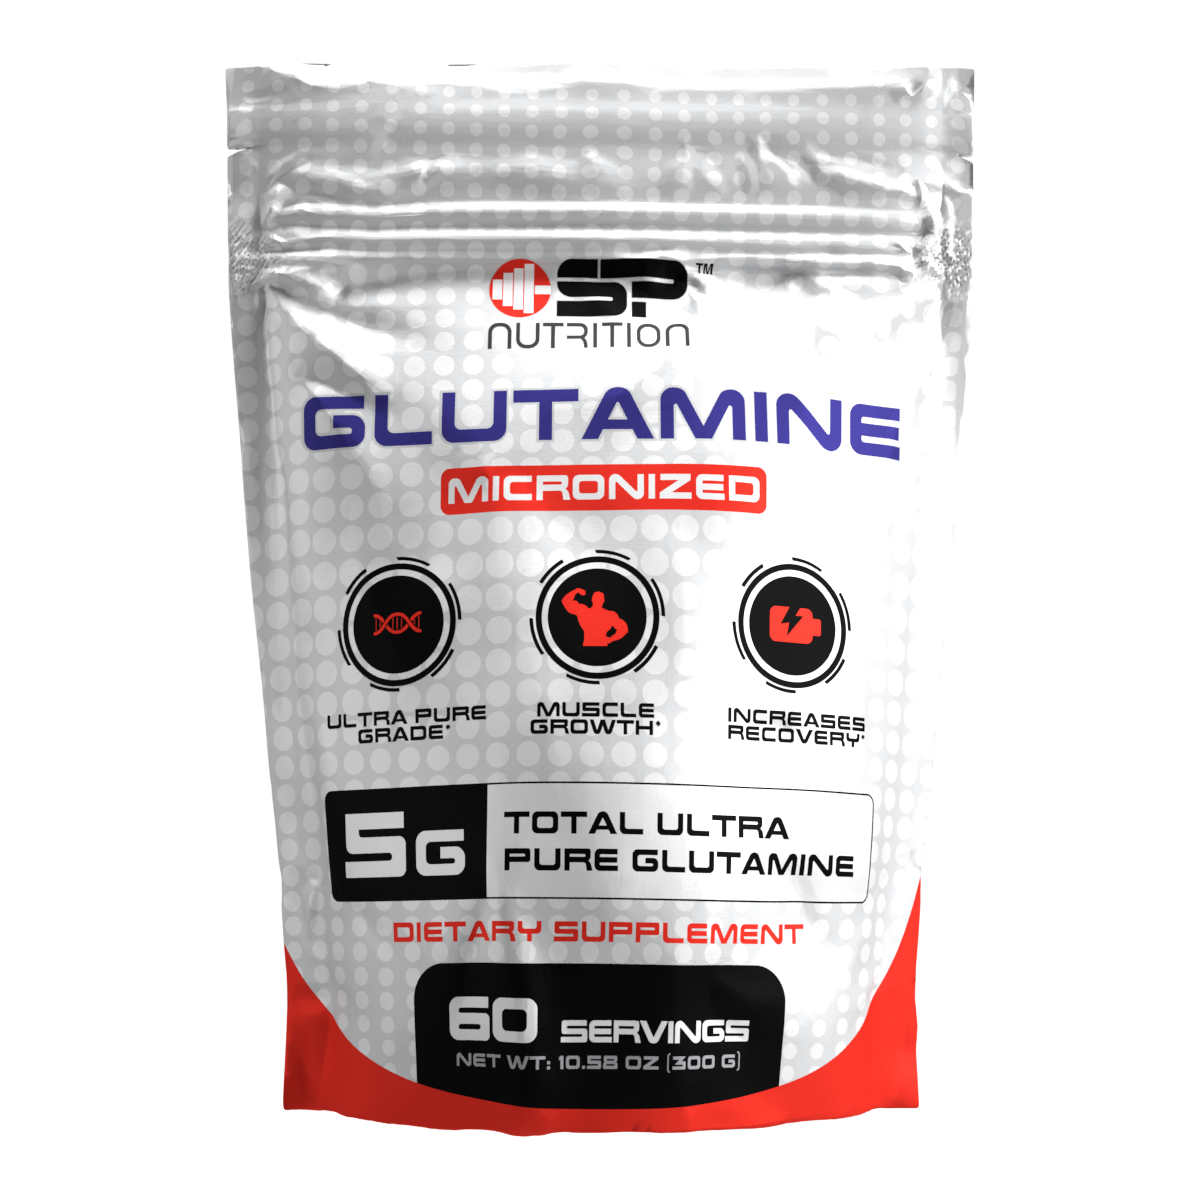 Glutamine Micronized Powder (300 Grams) Unflavored - Gluten Free & Non-GMO, 60 Servings